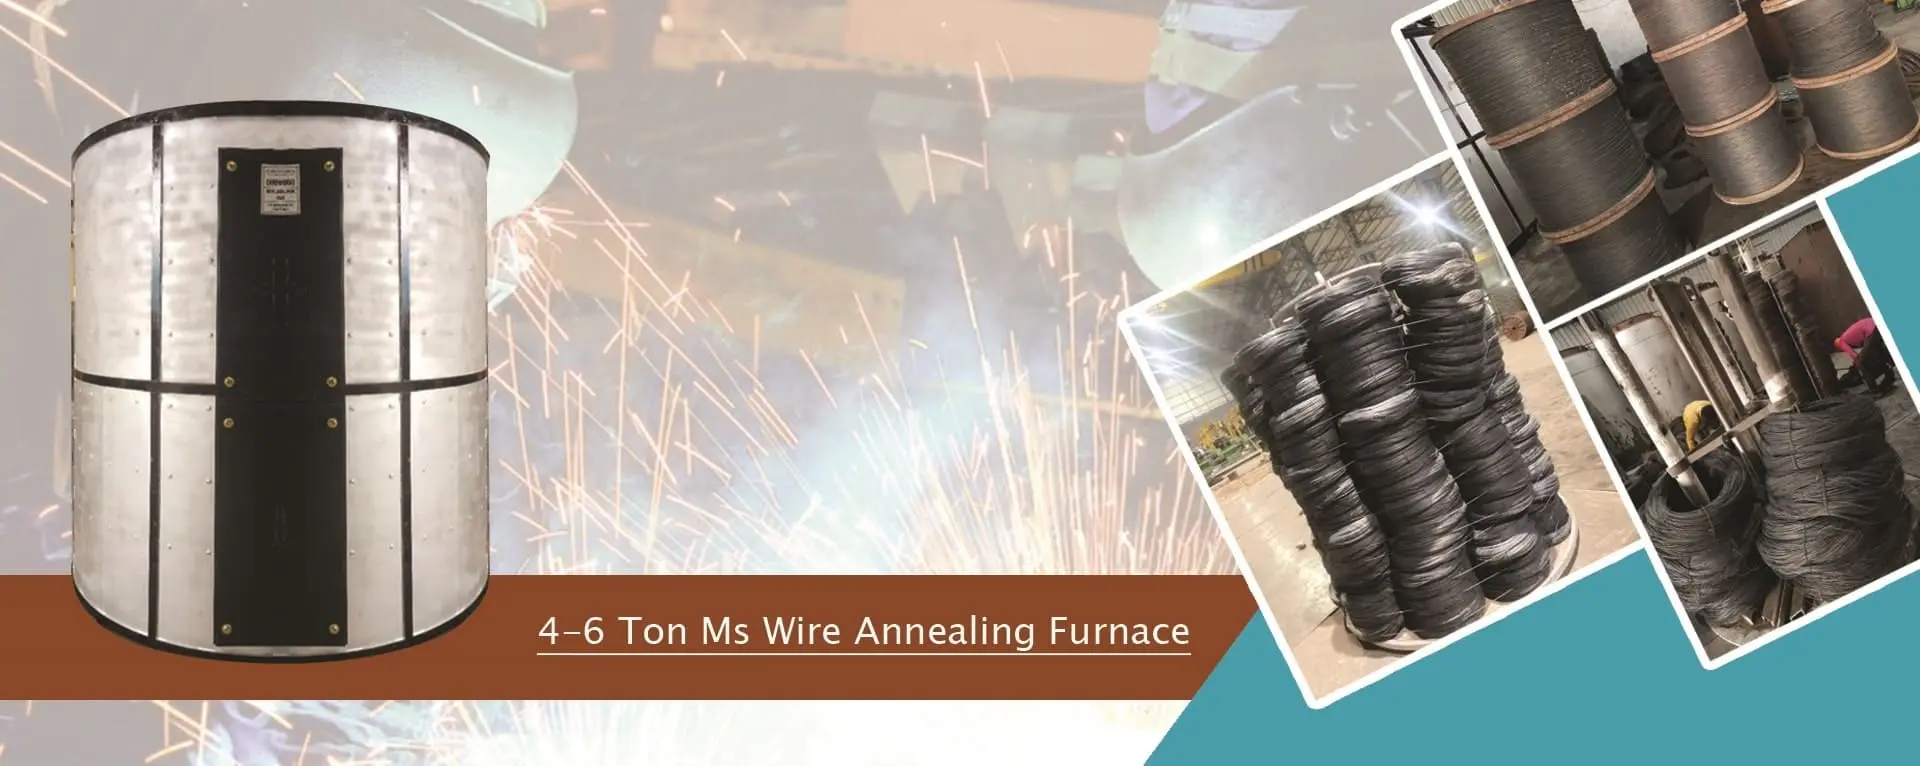 Furnace Manufacturer in Pune